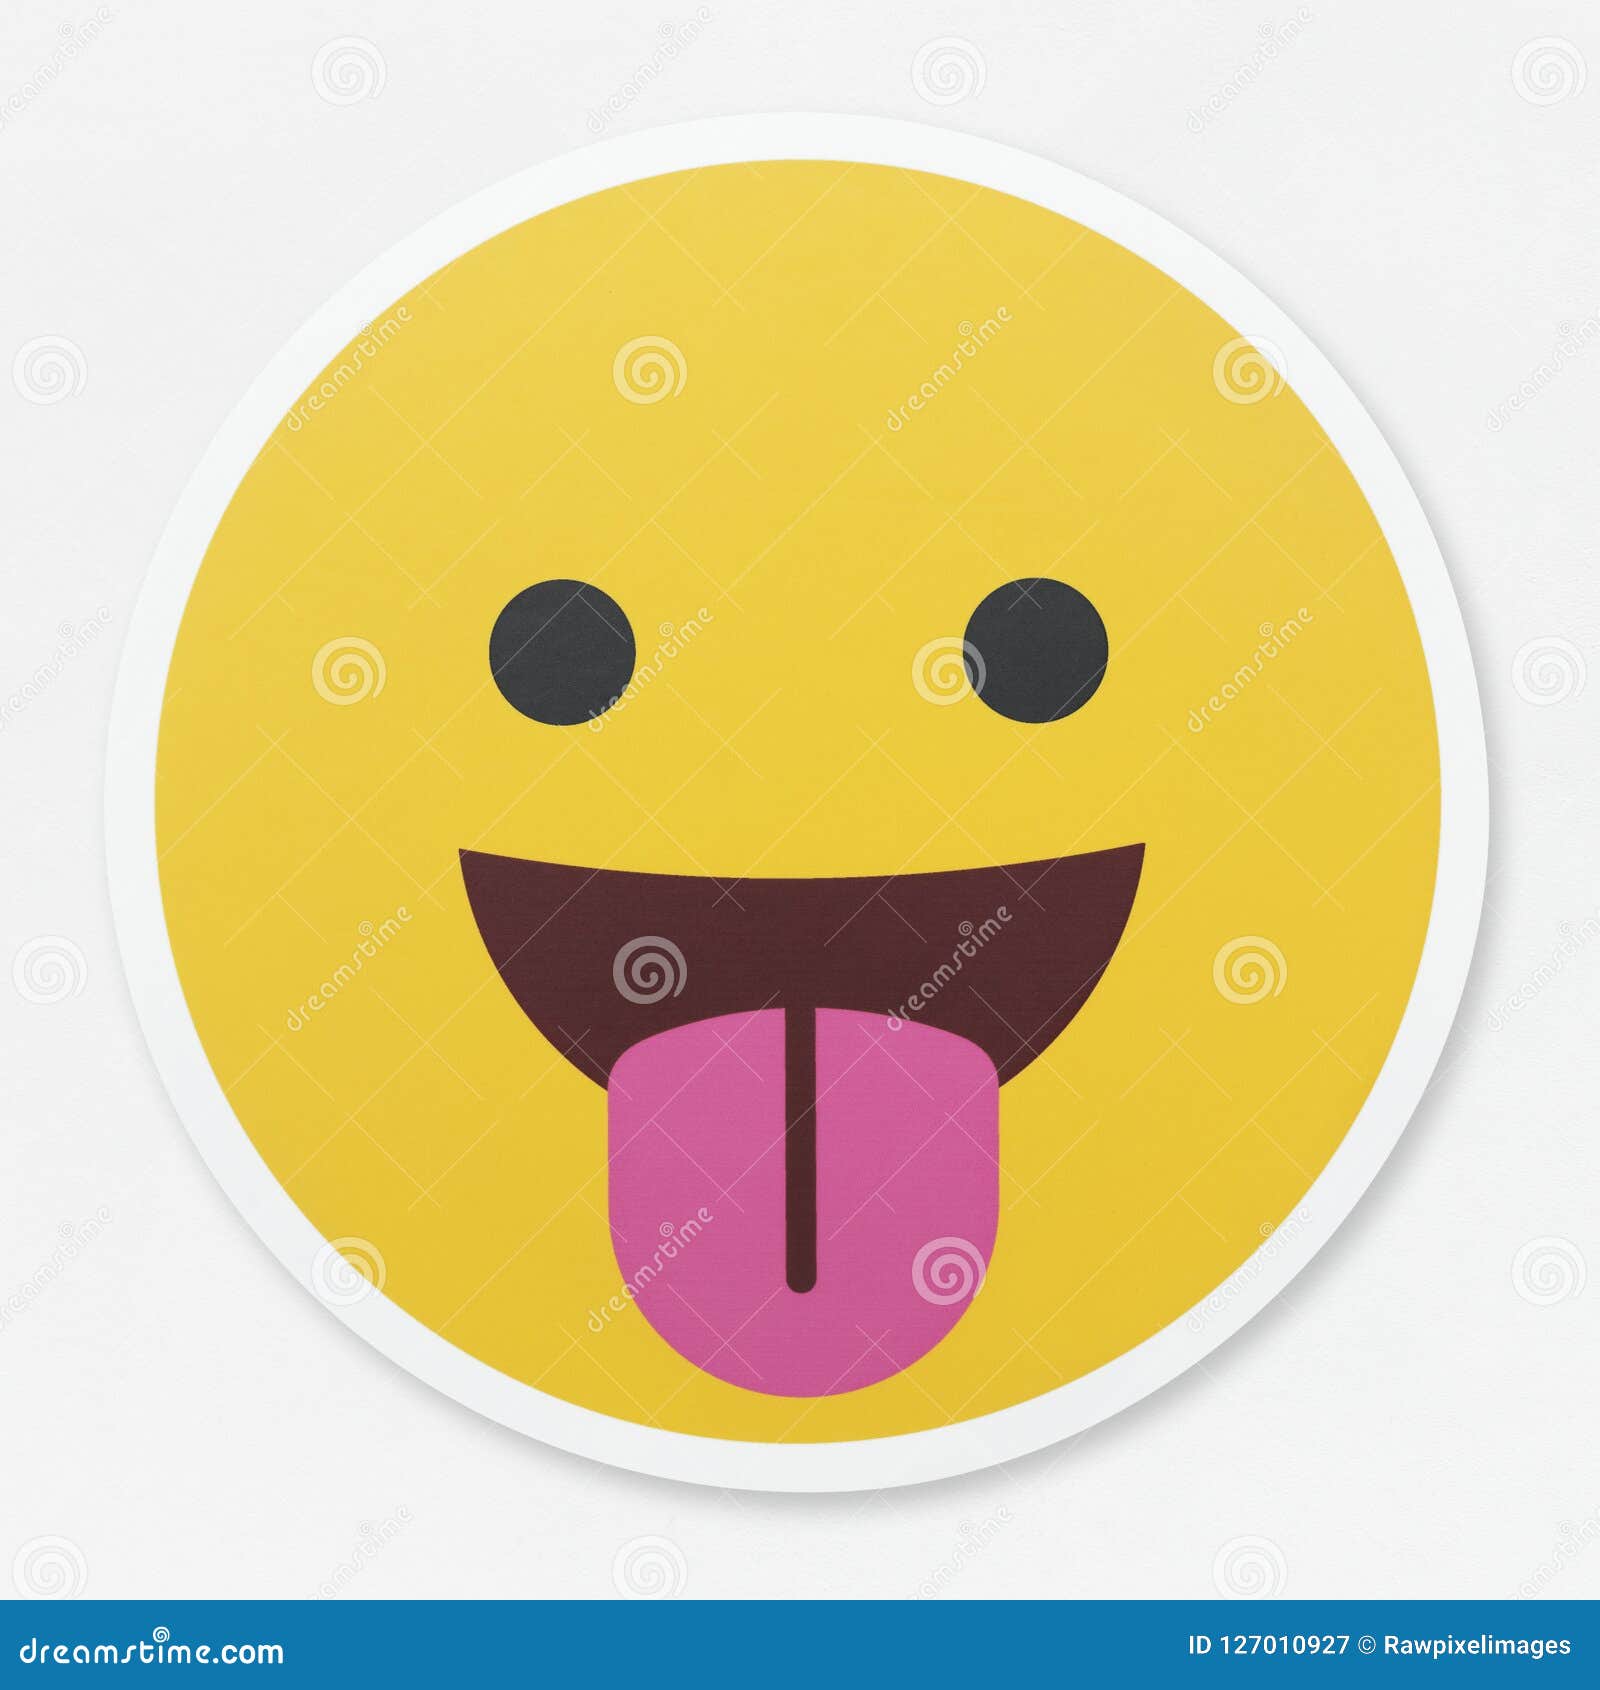 457 Smiley Face Sticker Stock Photos - Free & Royalty-Free Stock